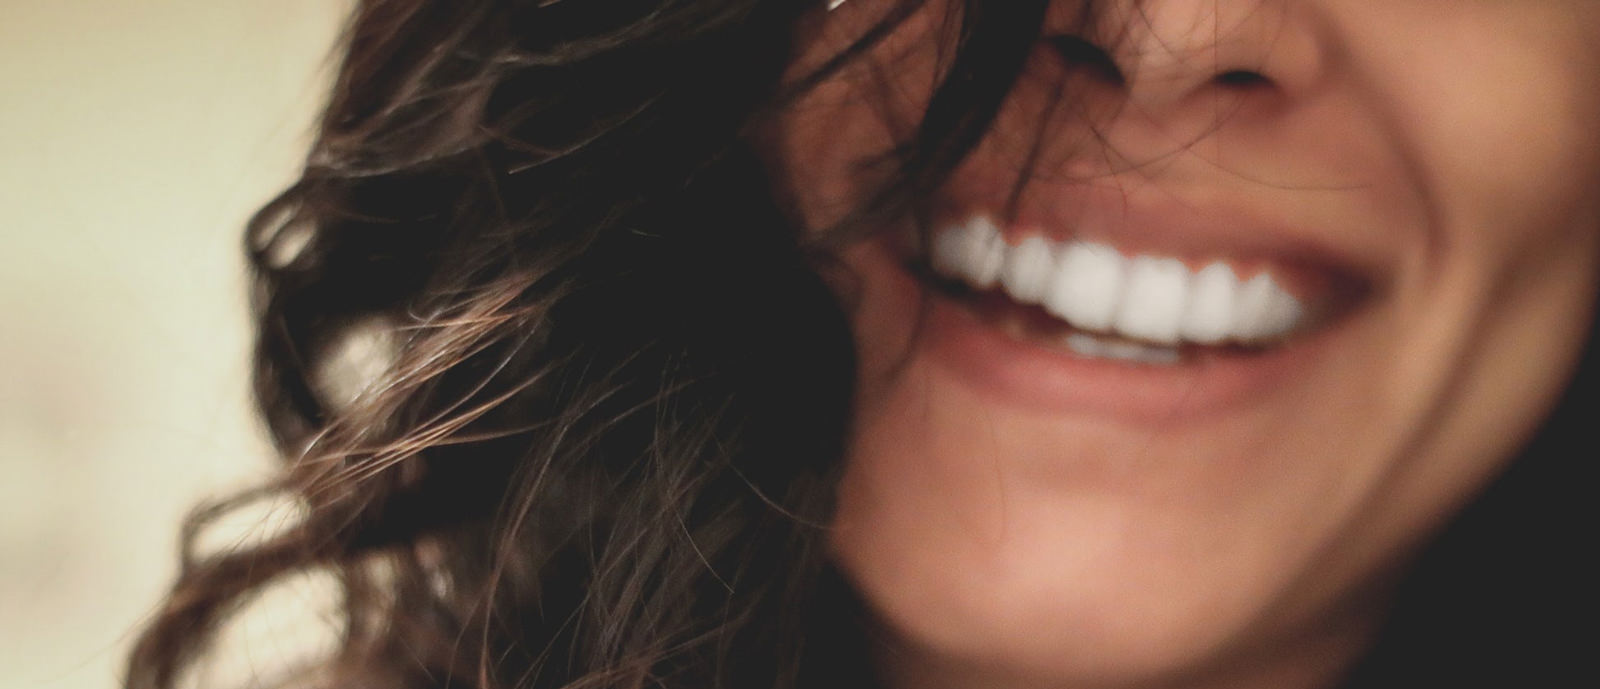 white teeth girl smiling